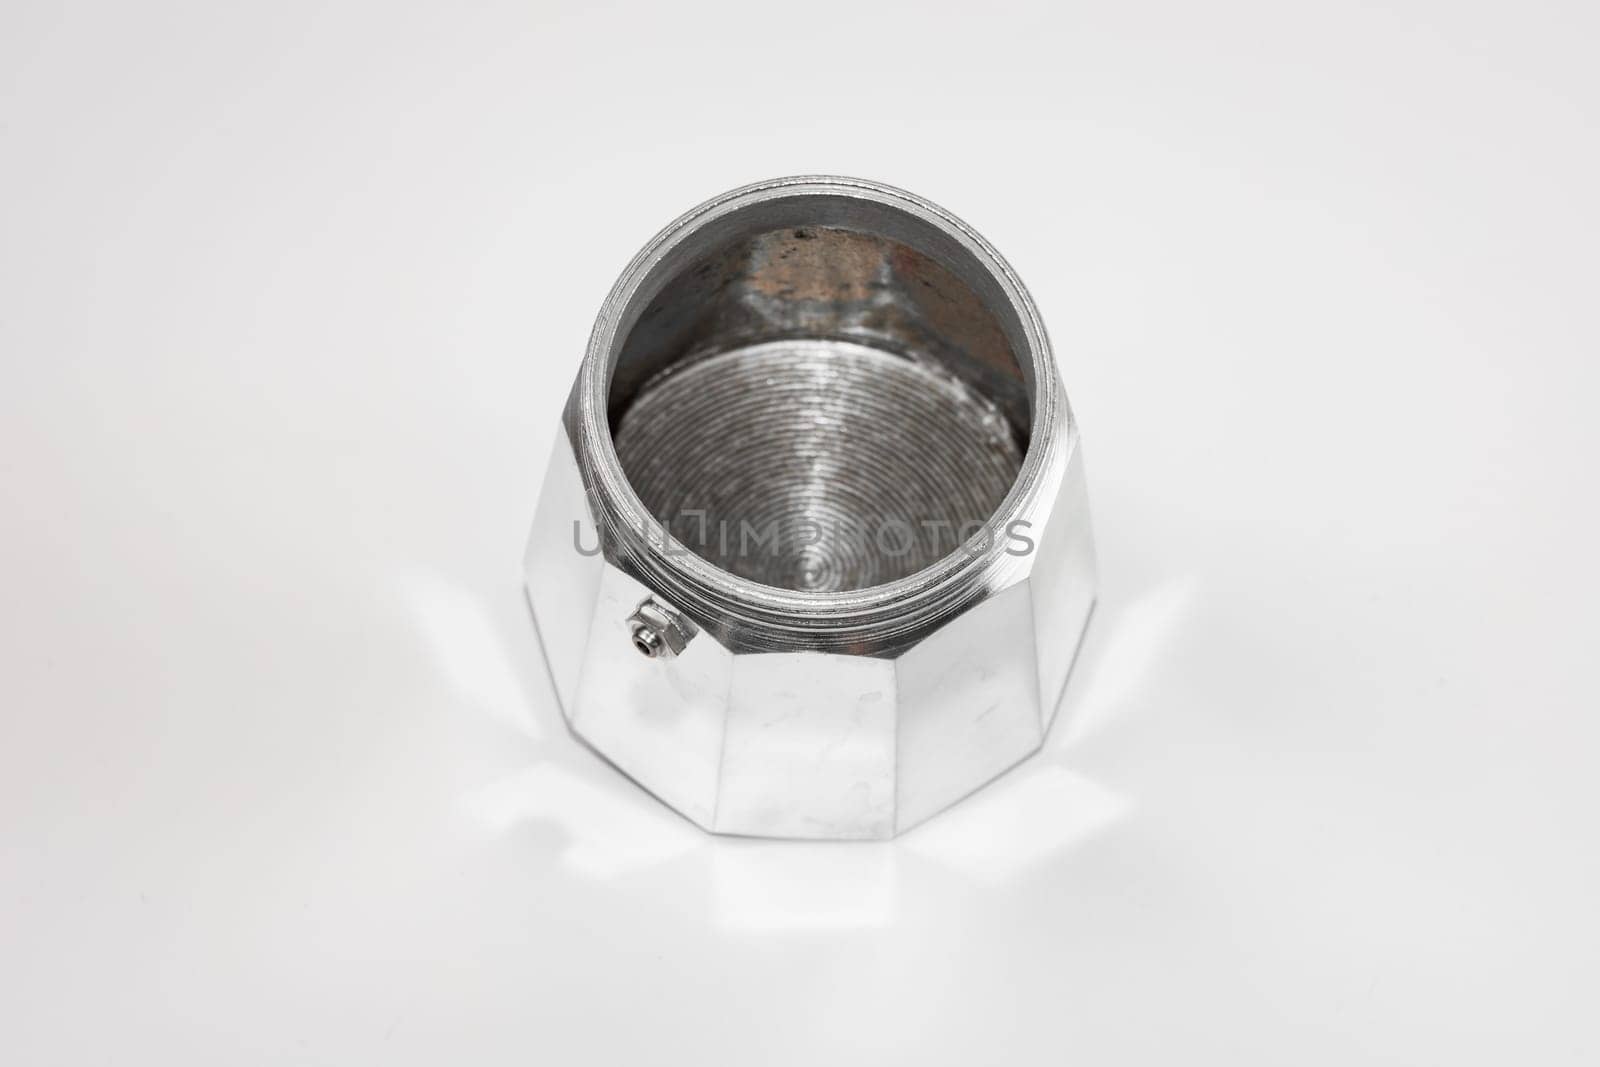 Classic aluminium metallic coffee pot with some parts